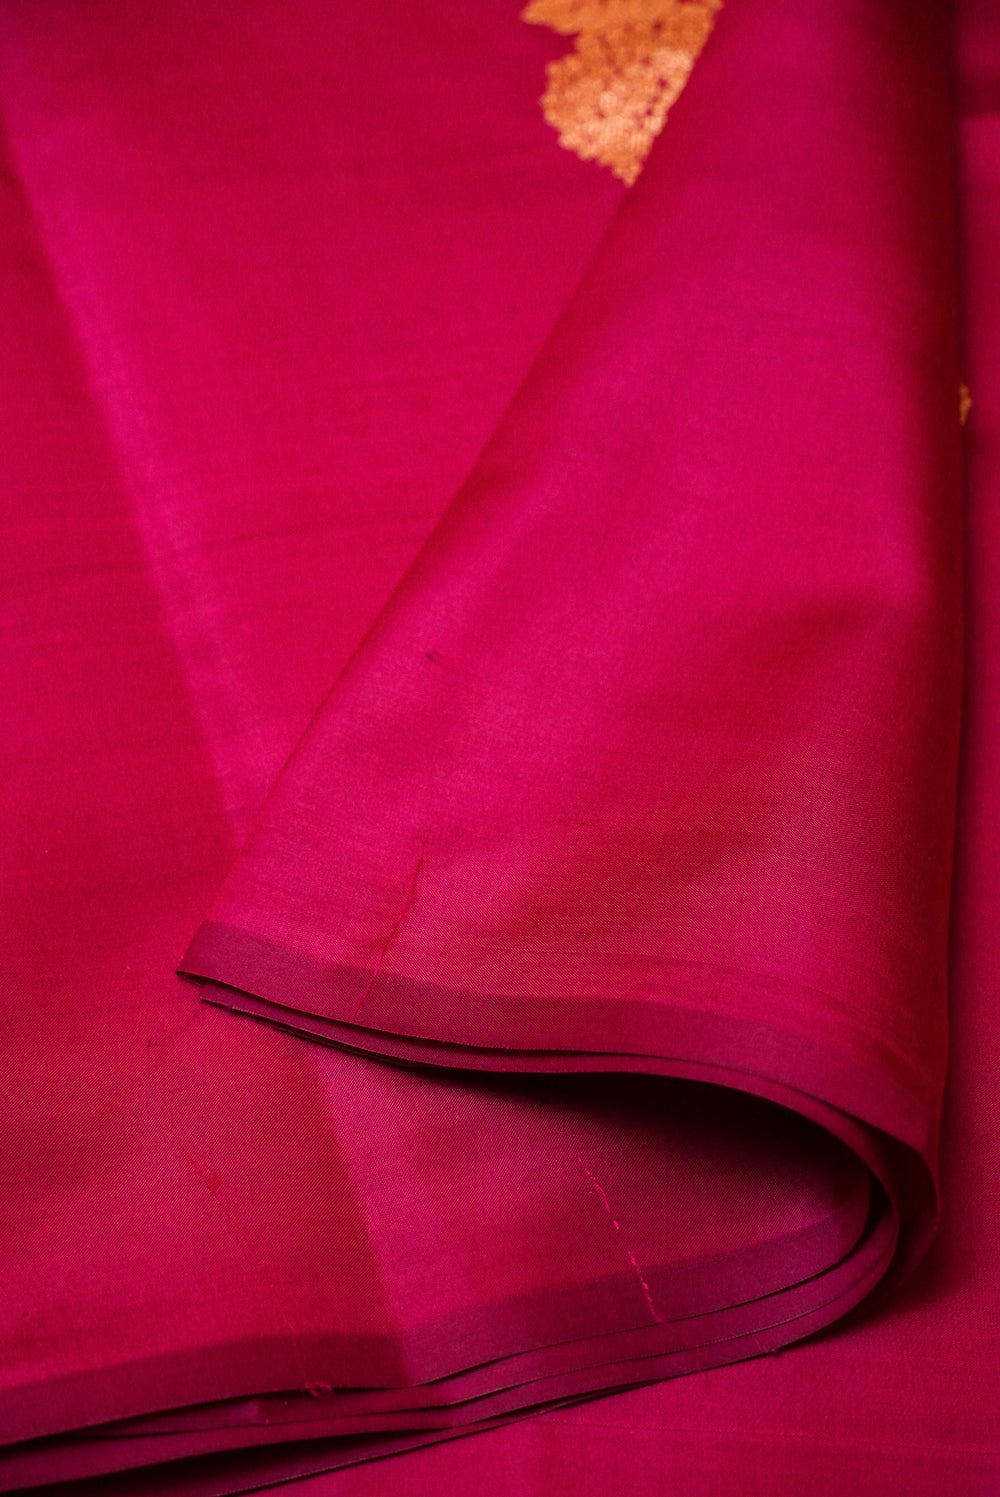 Handwoven Maroon Banarasi Soft Silk Saree